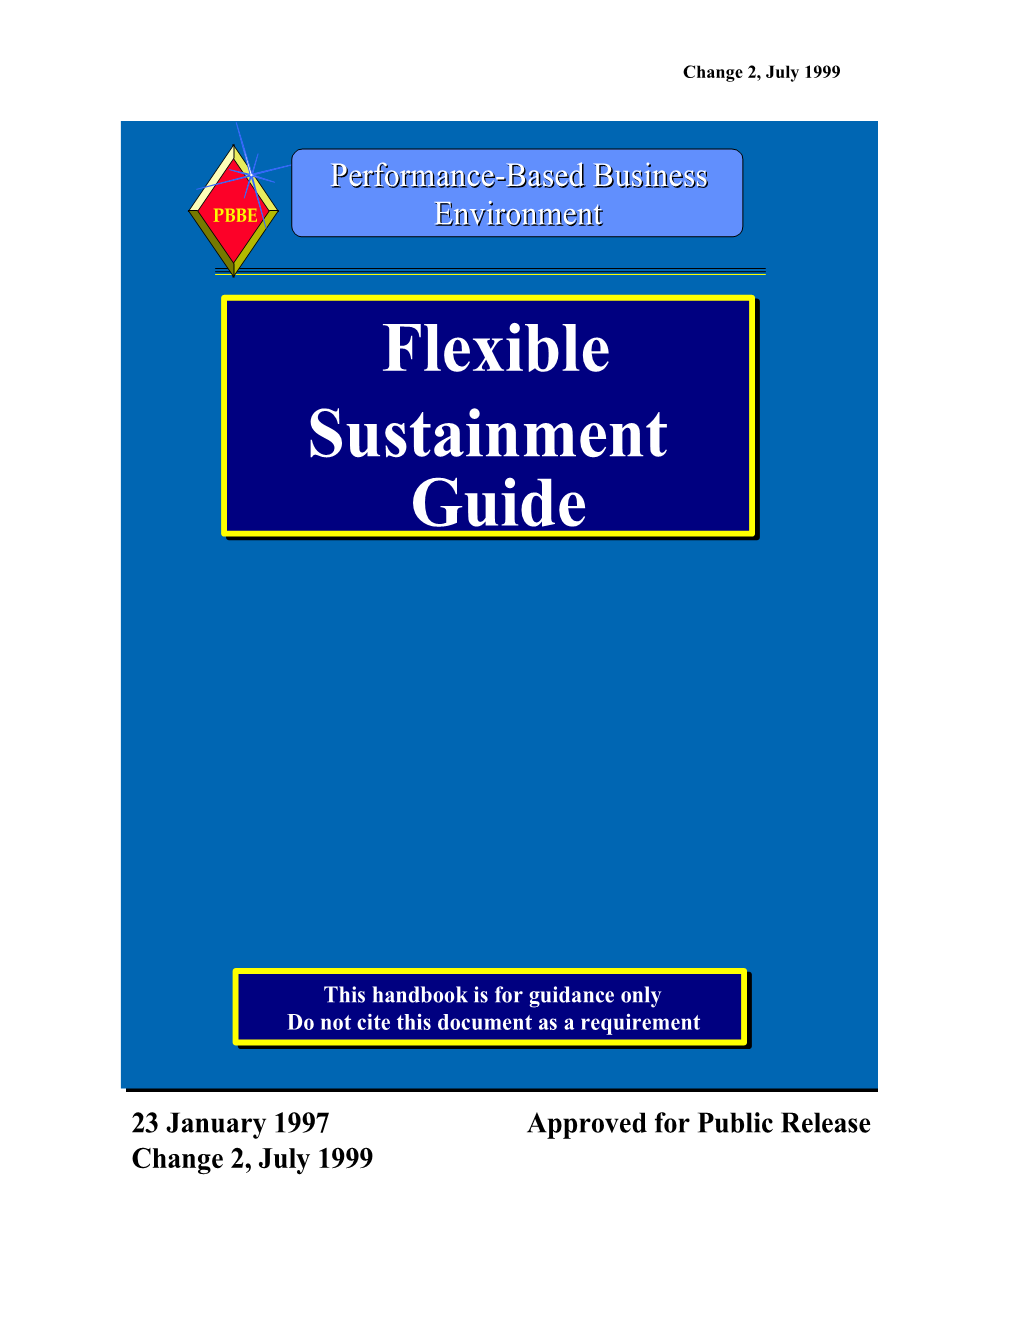 Flexible Sustainment Guide - 23 Jan 97